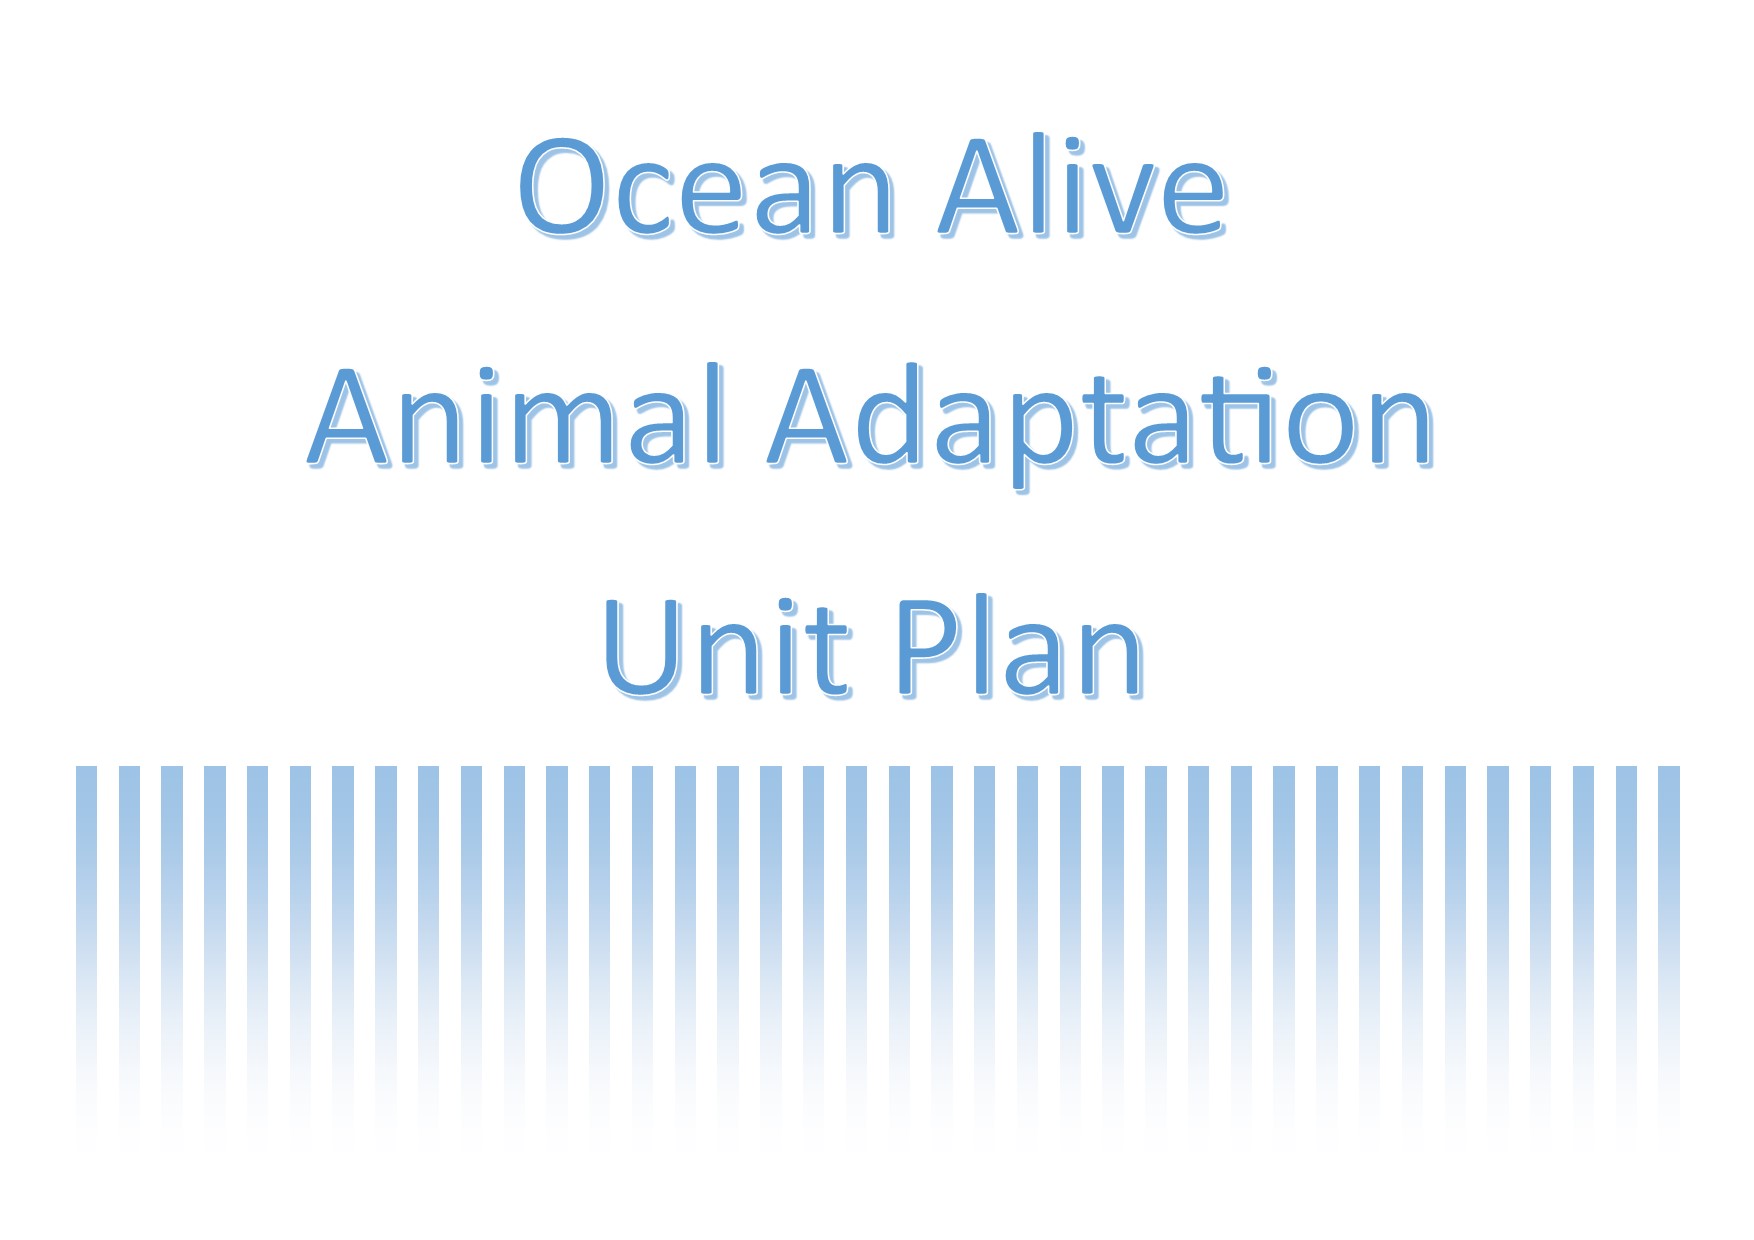 Animal adaptations unit plan